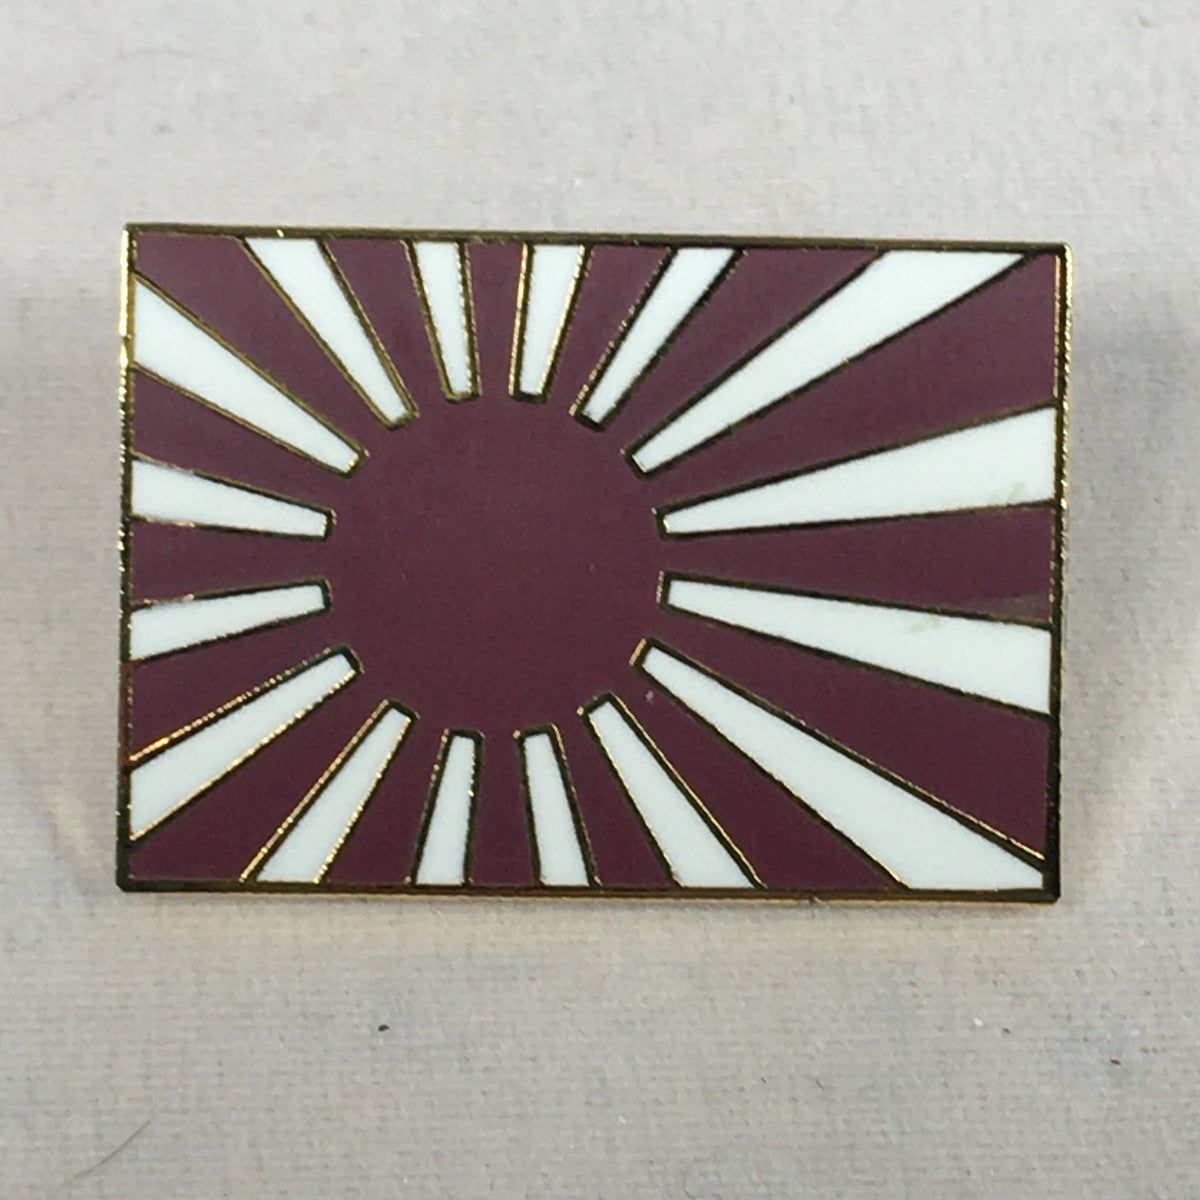 Japanese Rising Sun Pin